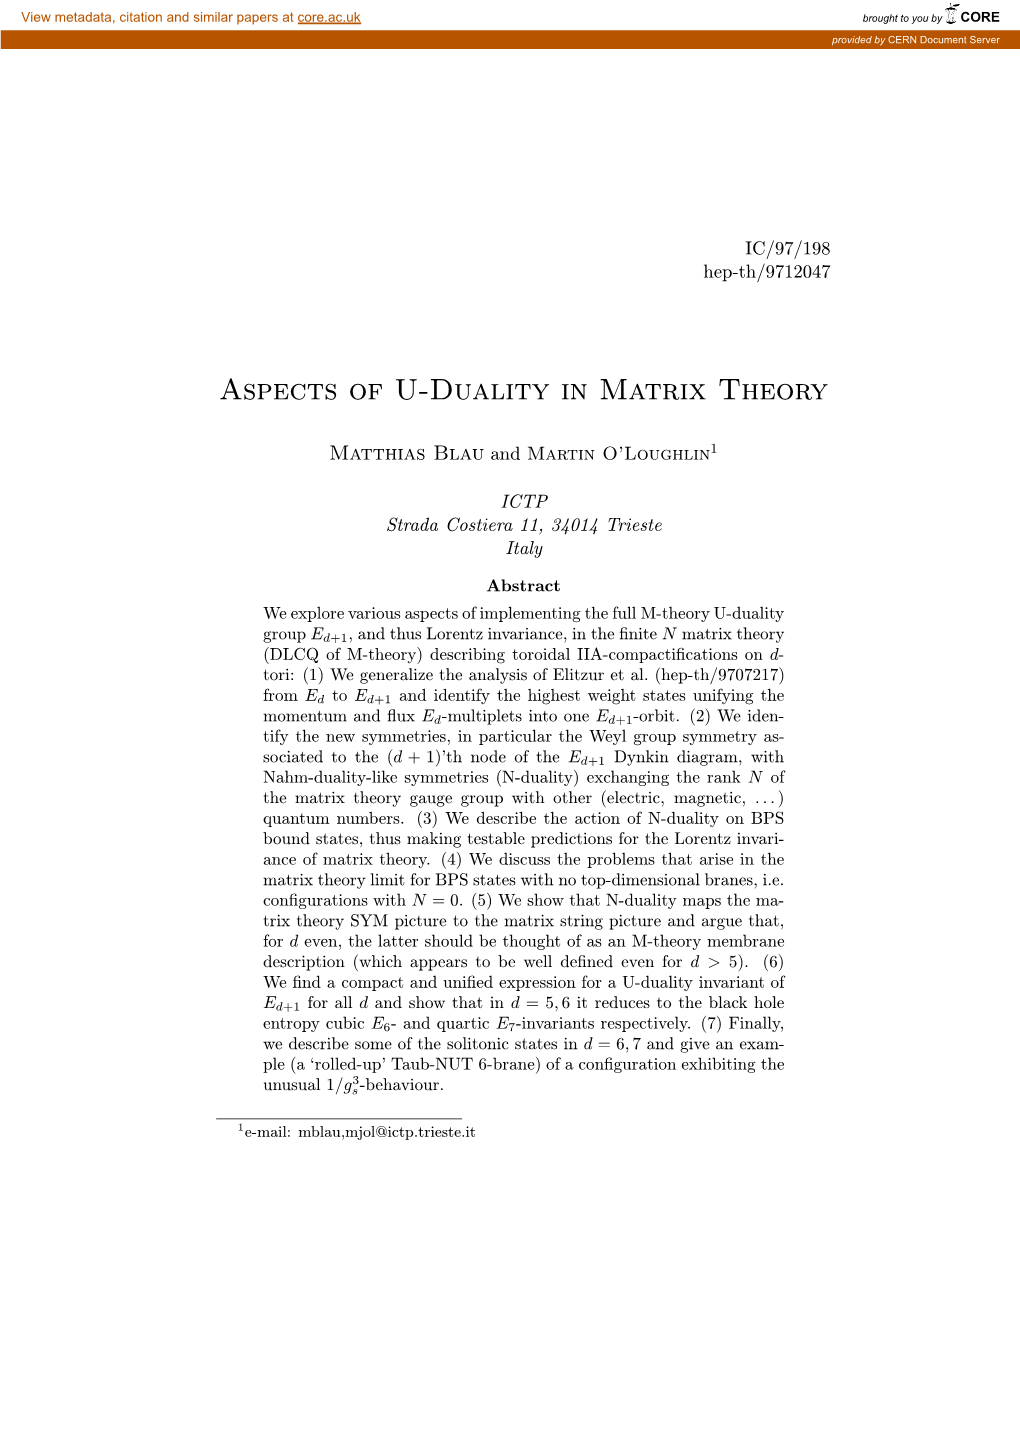 Aspects of U-Duality in Matrix Theory